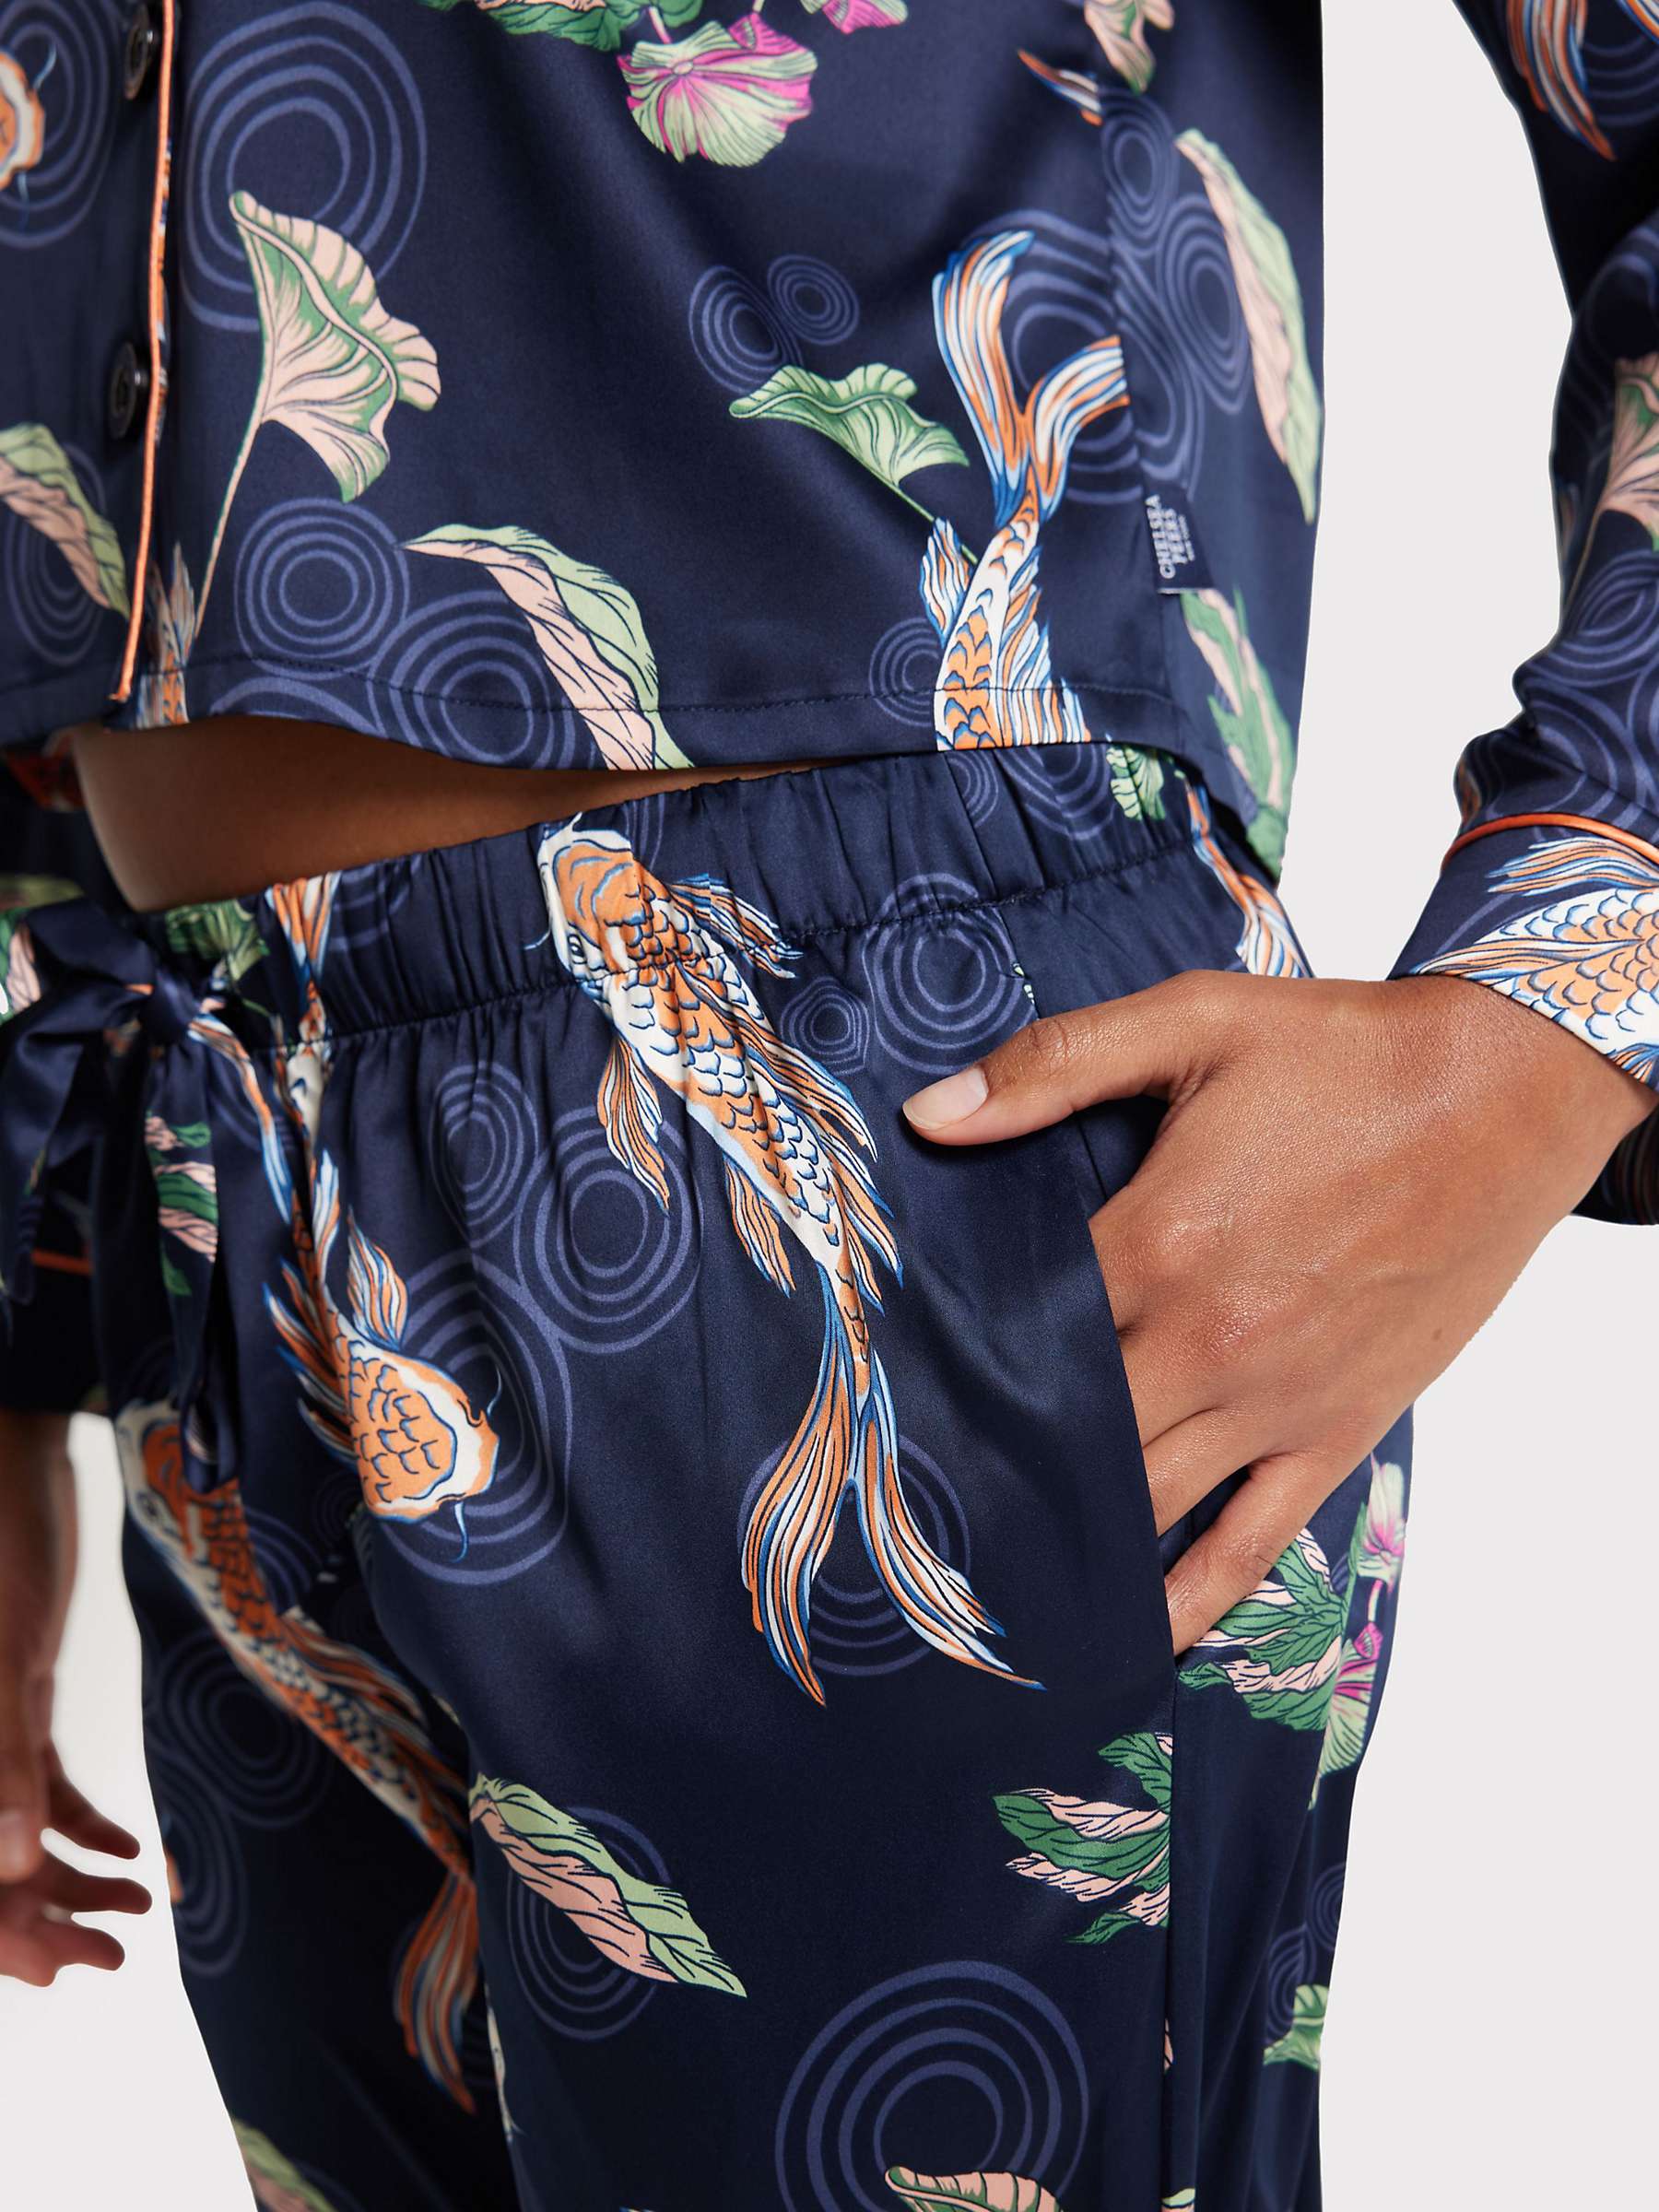 Buy Chelsea Peers Satin Koi Fish Print Long Pyjama Set, Navy Online at johnlewis.com